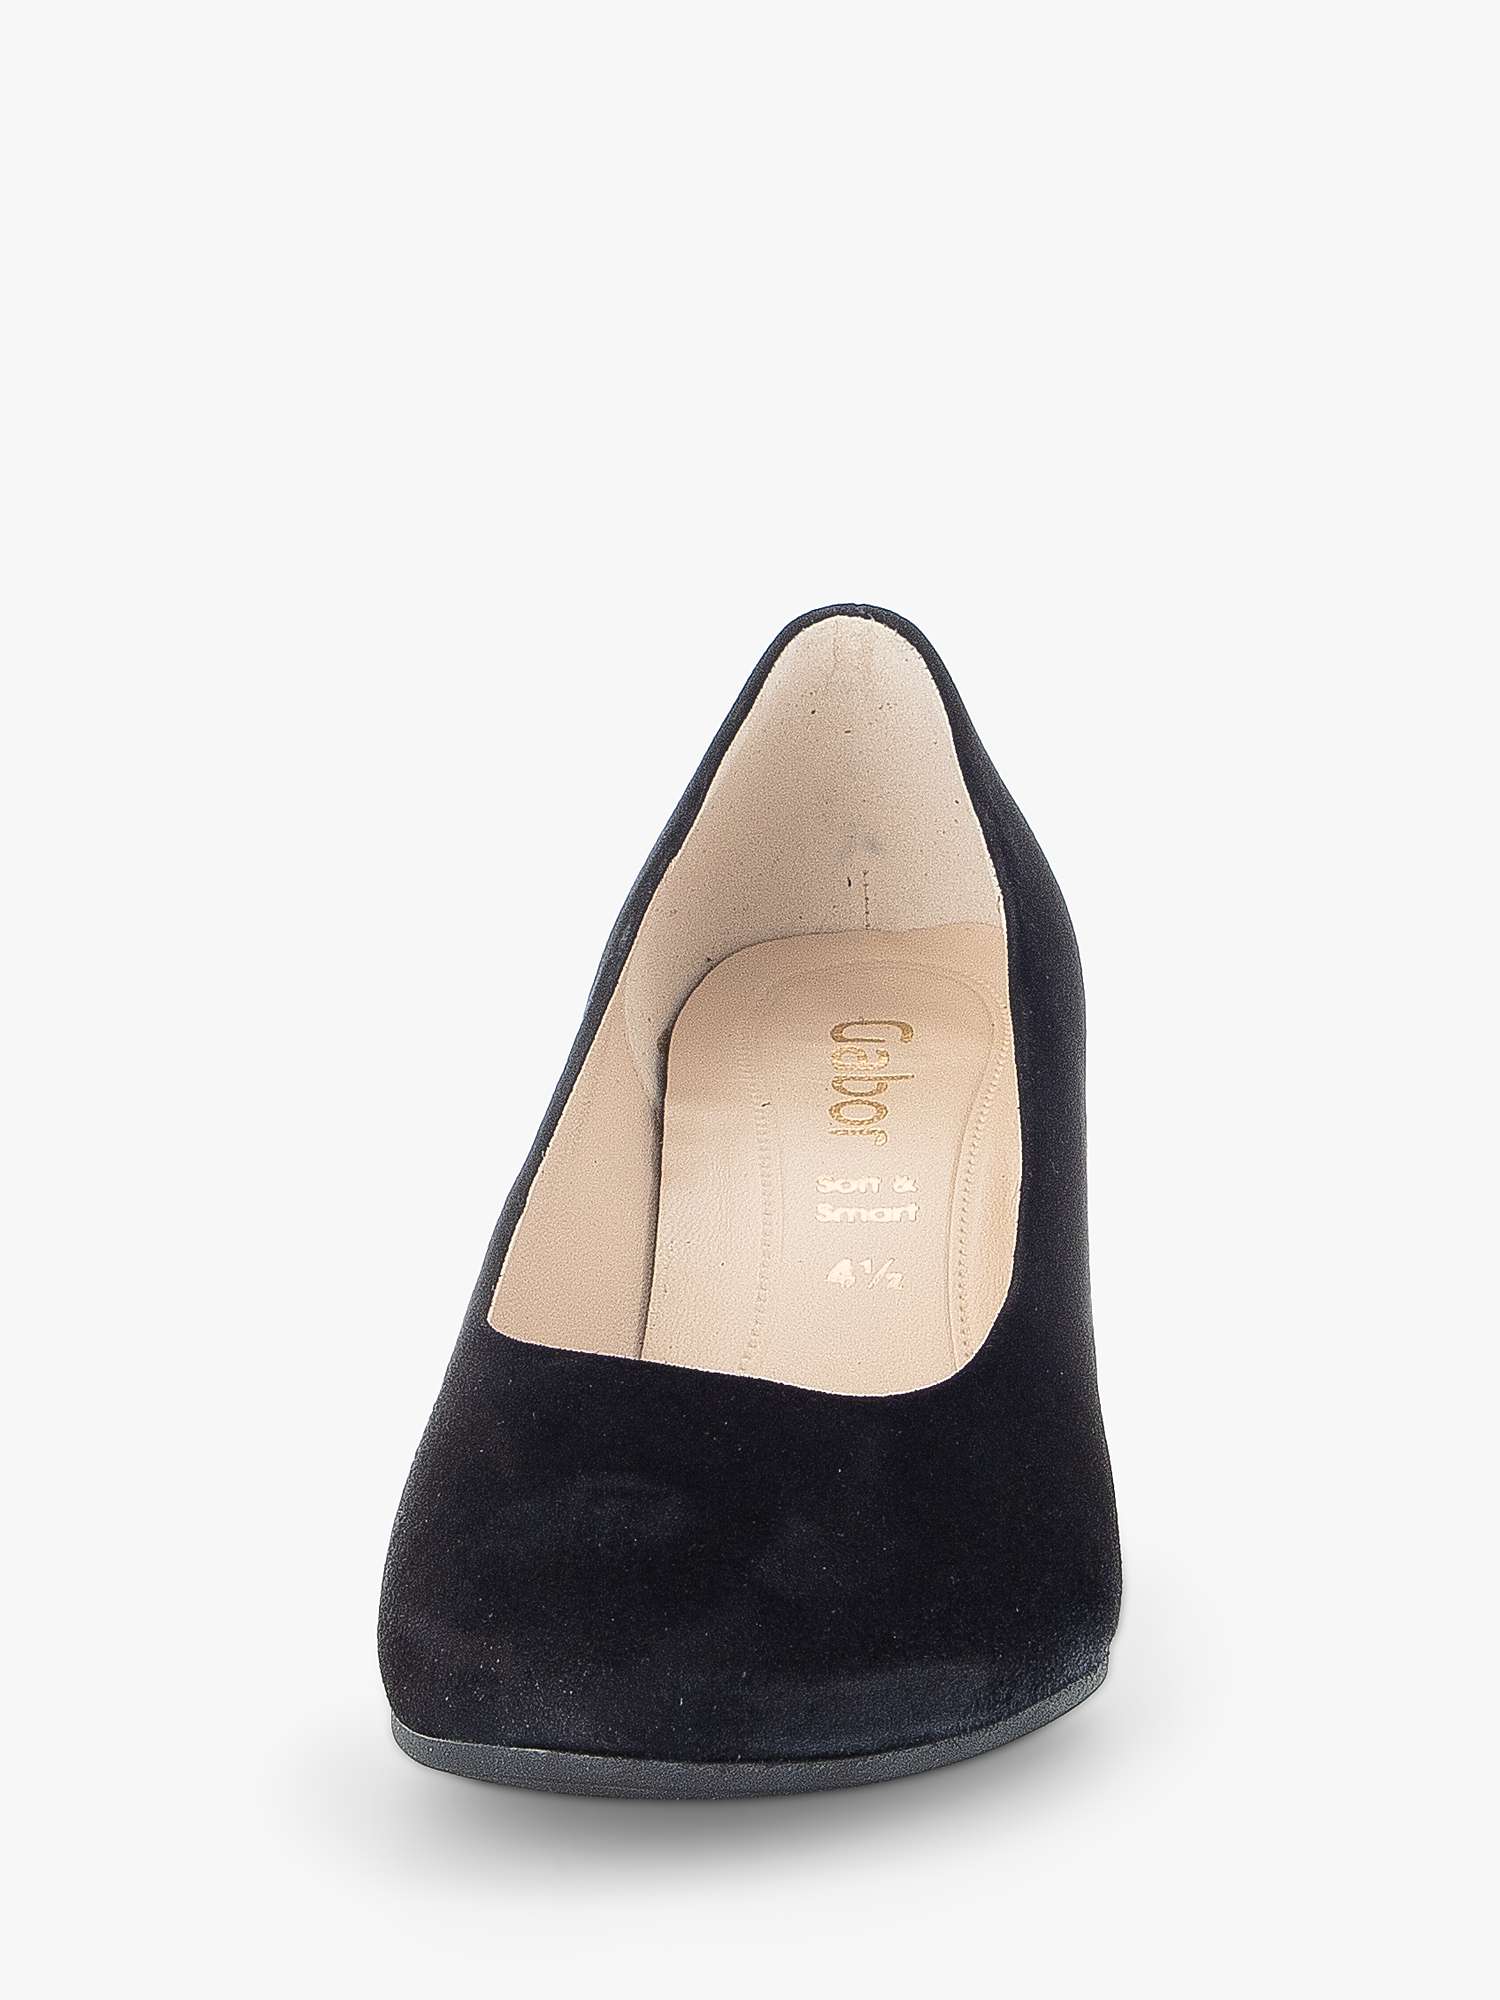 Gabor Edina Suede Cone Heel Court Shoes, Black at John Lewis & Partners